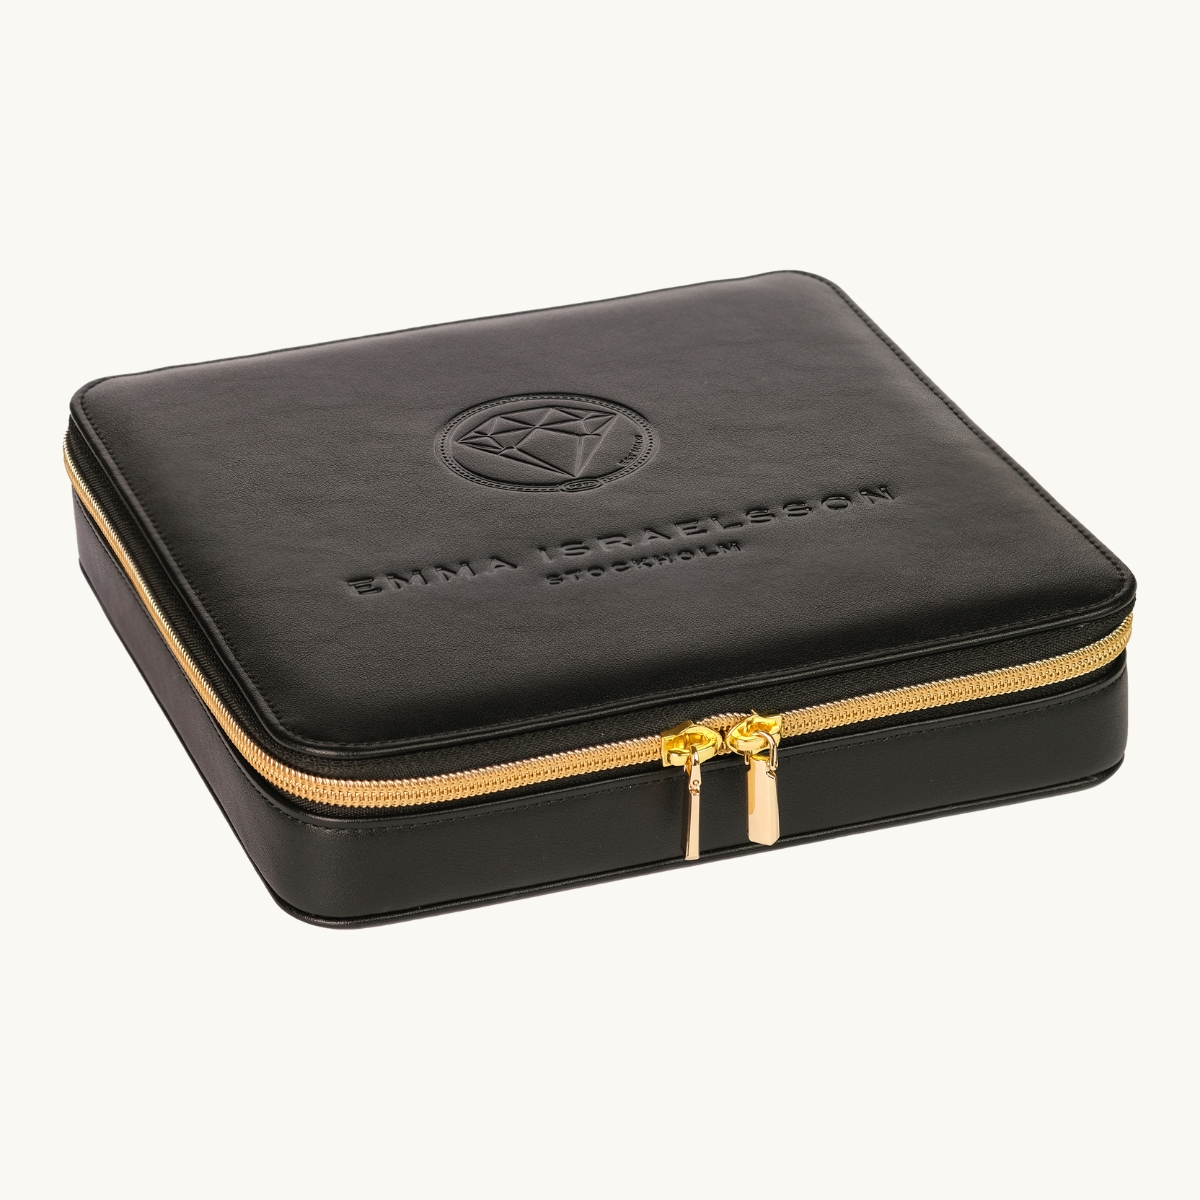 Black jewelry box with gold zipper